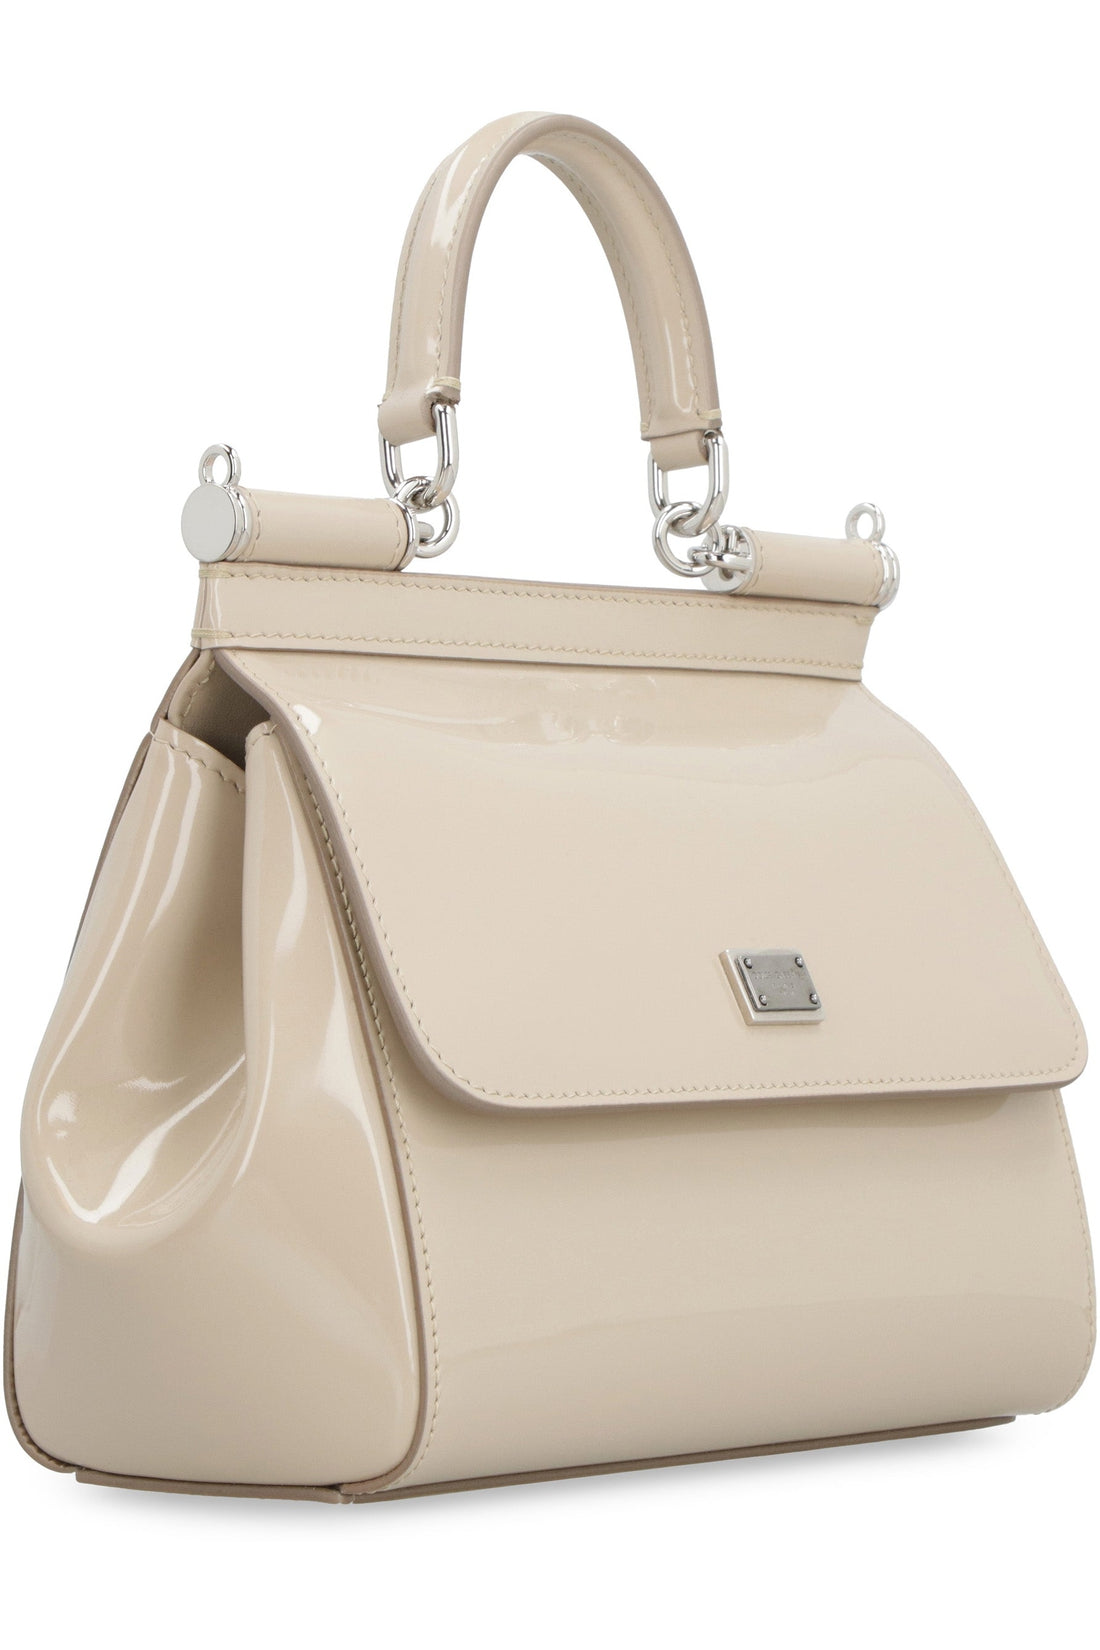 Dolce & Gabbana-OUTLET-SALE-Sicily Leather mini handbag-ARCHIVIST